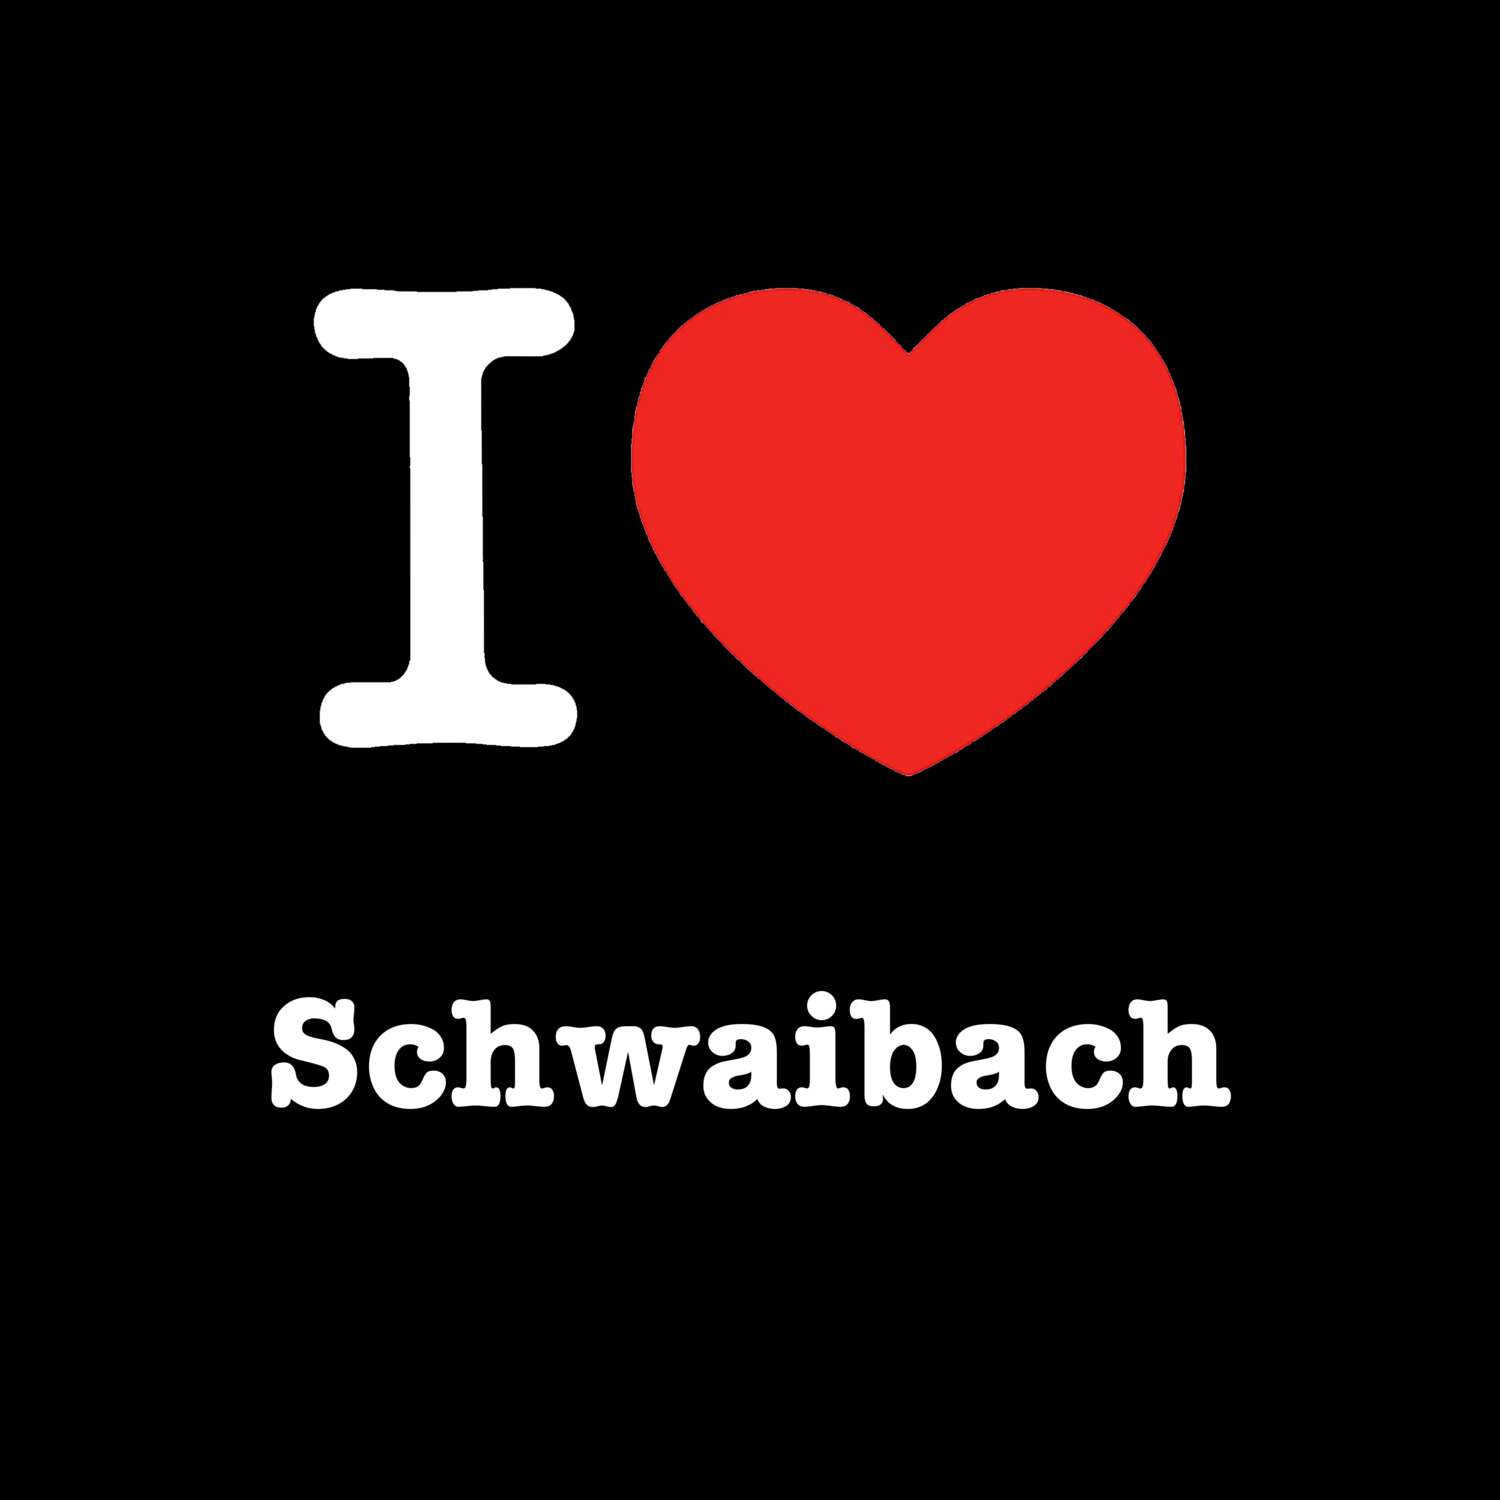 Schwaibach T-Shirt »I love«